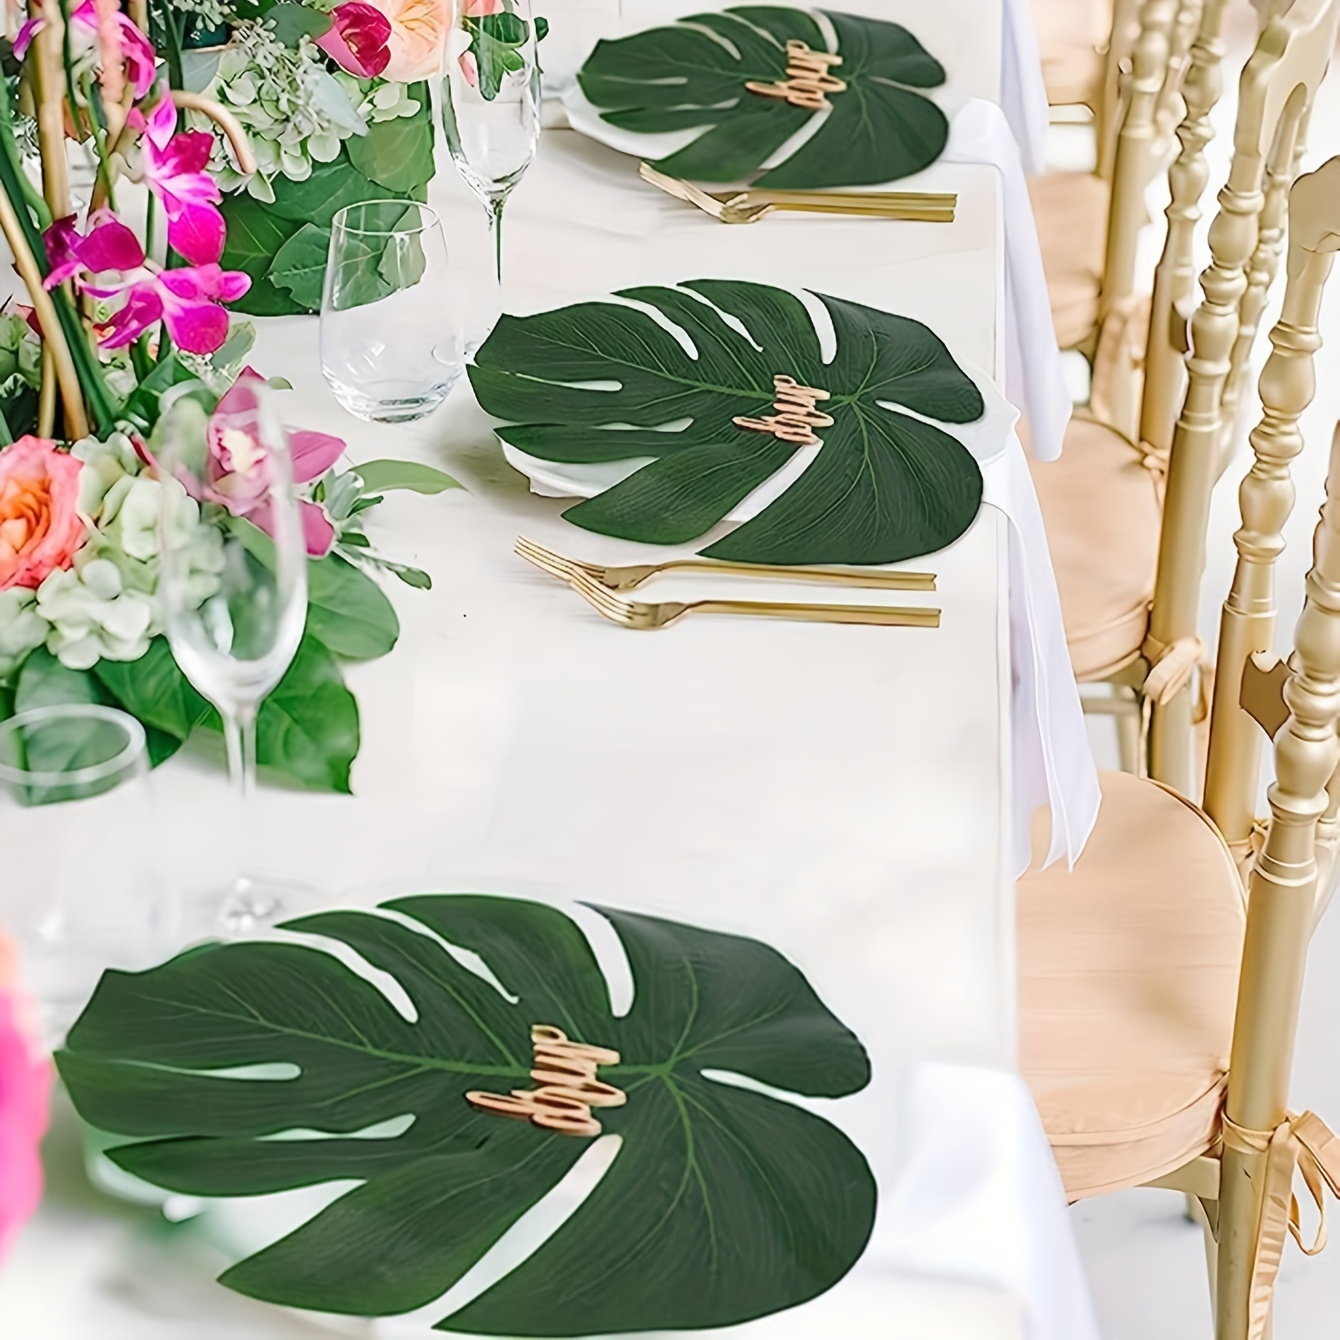  Moon Boat 120PCS Tropical Palm Leaves Plant Imitation  Leaf-Hawaiian/Luau/Jungle Party Table Decorations : Home & Kitchen